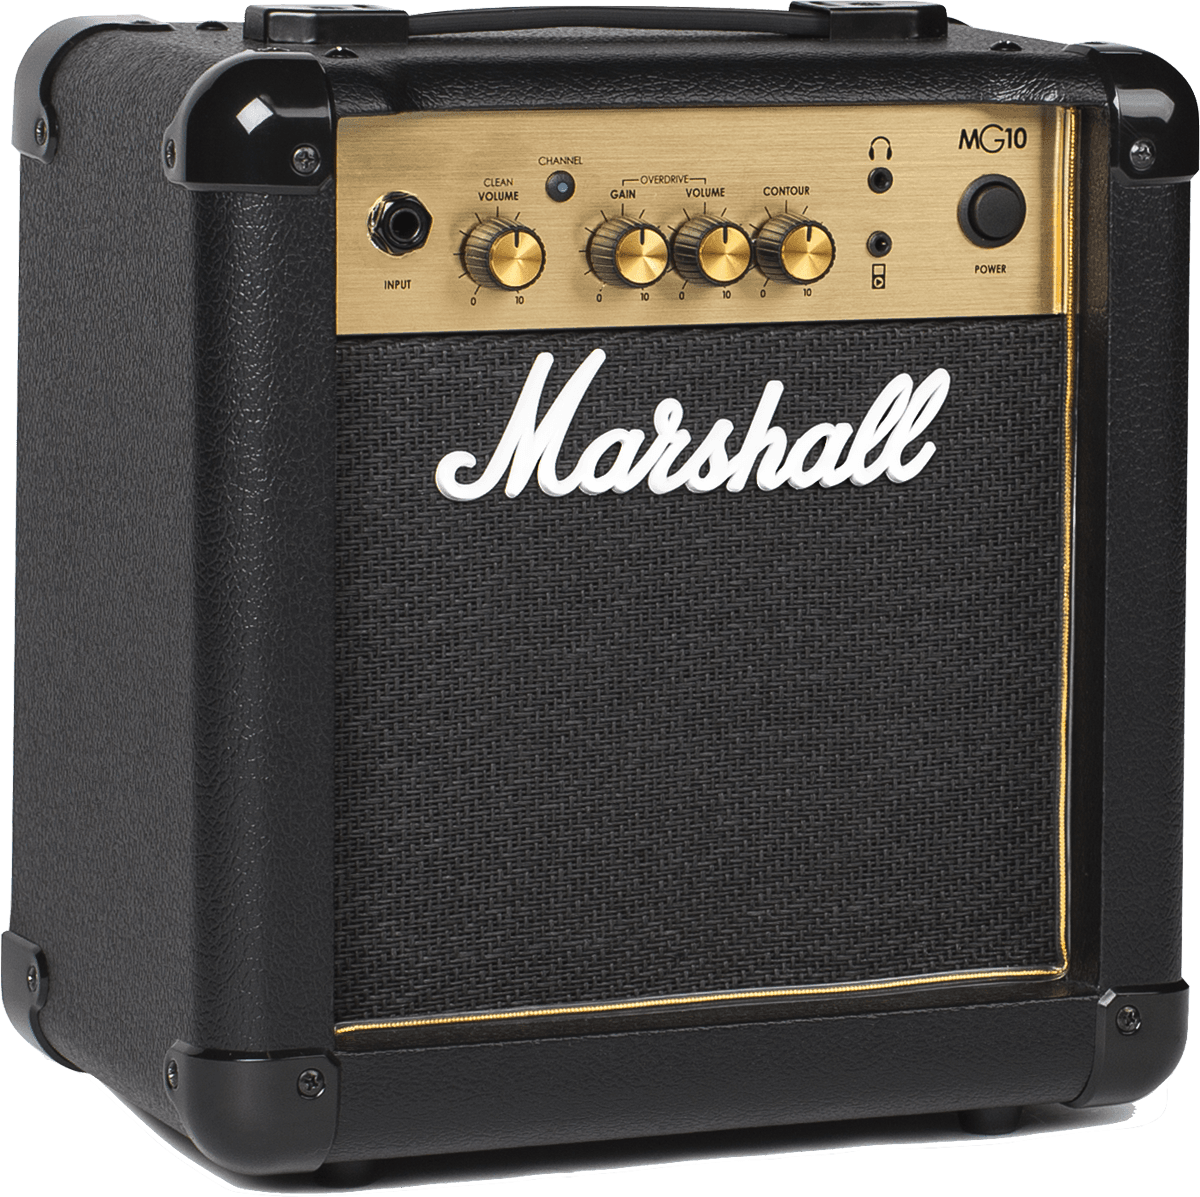 Eastone Tl70 + Marshall Mg10 +housse + Courroie + Cable + Mediators - 3 Tone Sunburst - Elektrische gitaar set - Variation 6